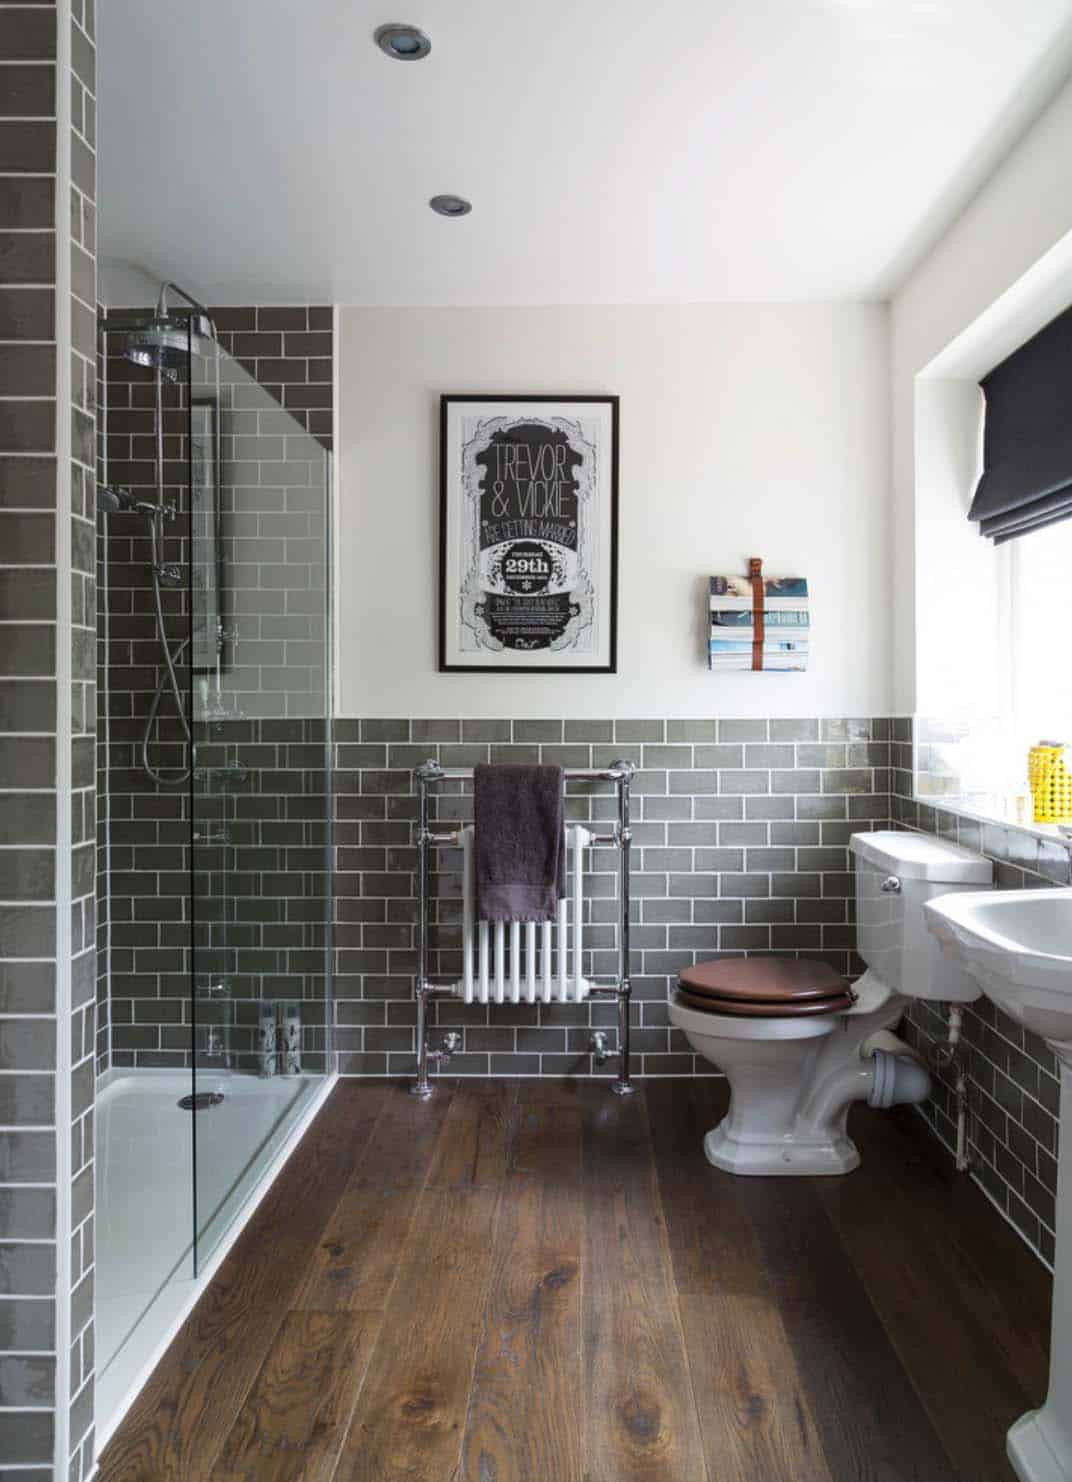 Bathroom Tile Ideas Traditional
 53 Most fabulous traditional style bathroom designs ever